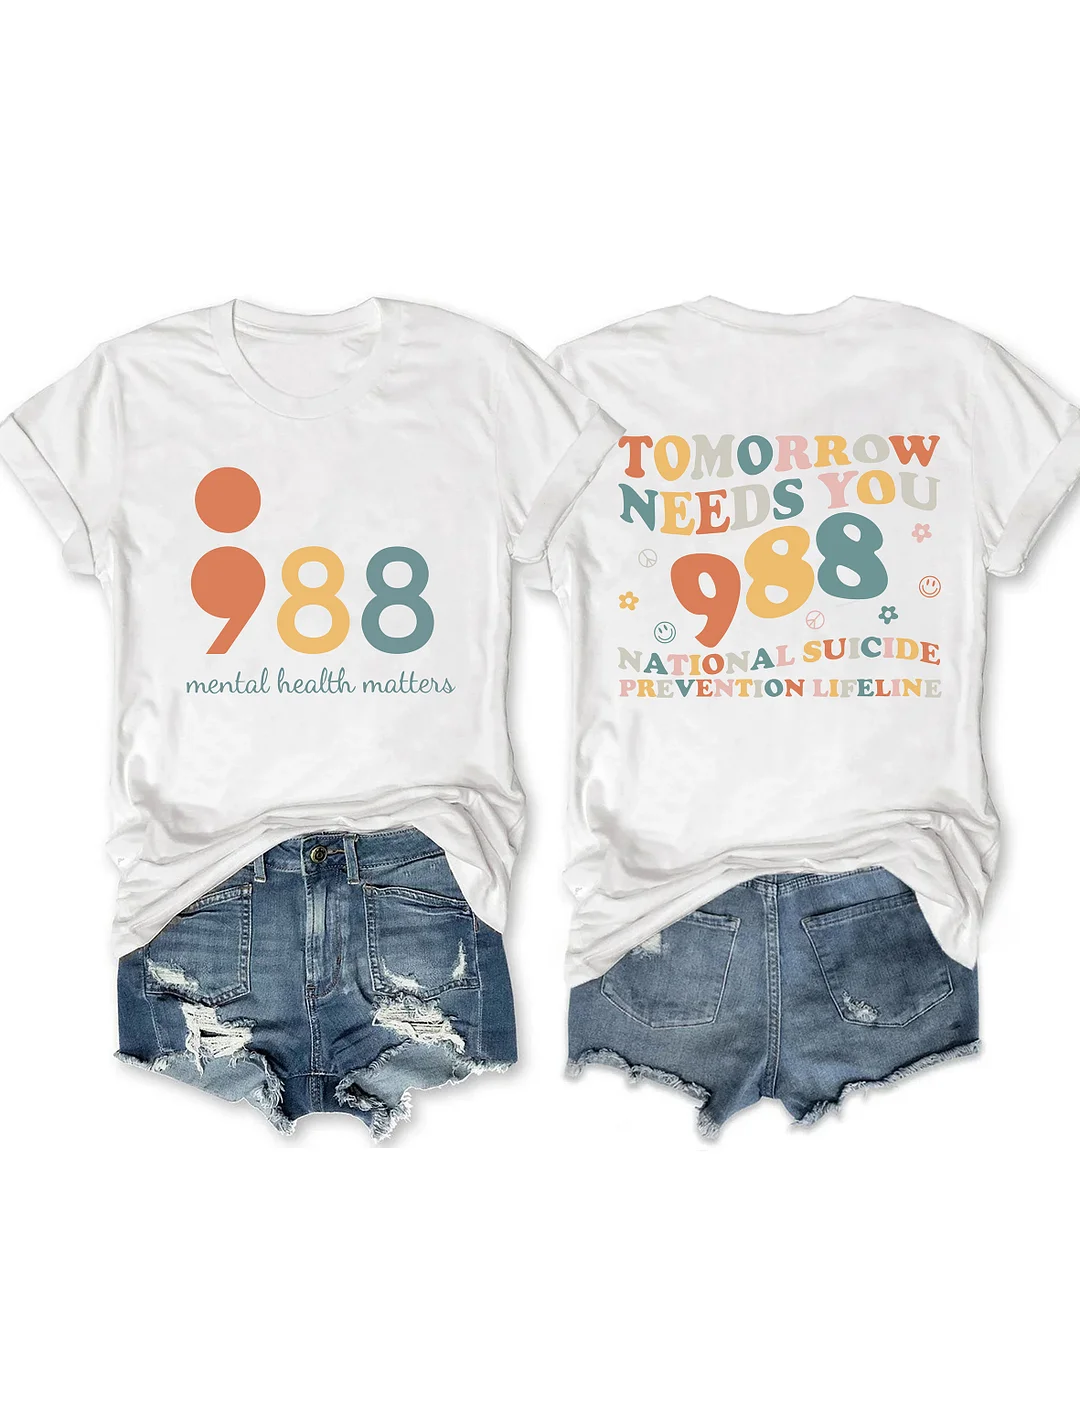 Tomorrow Needs You 988 T-shirt